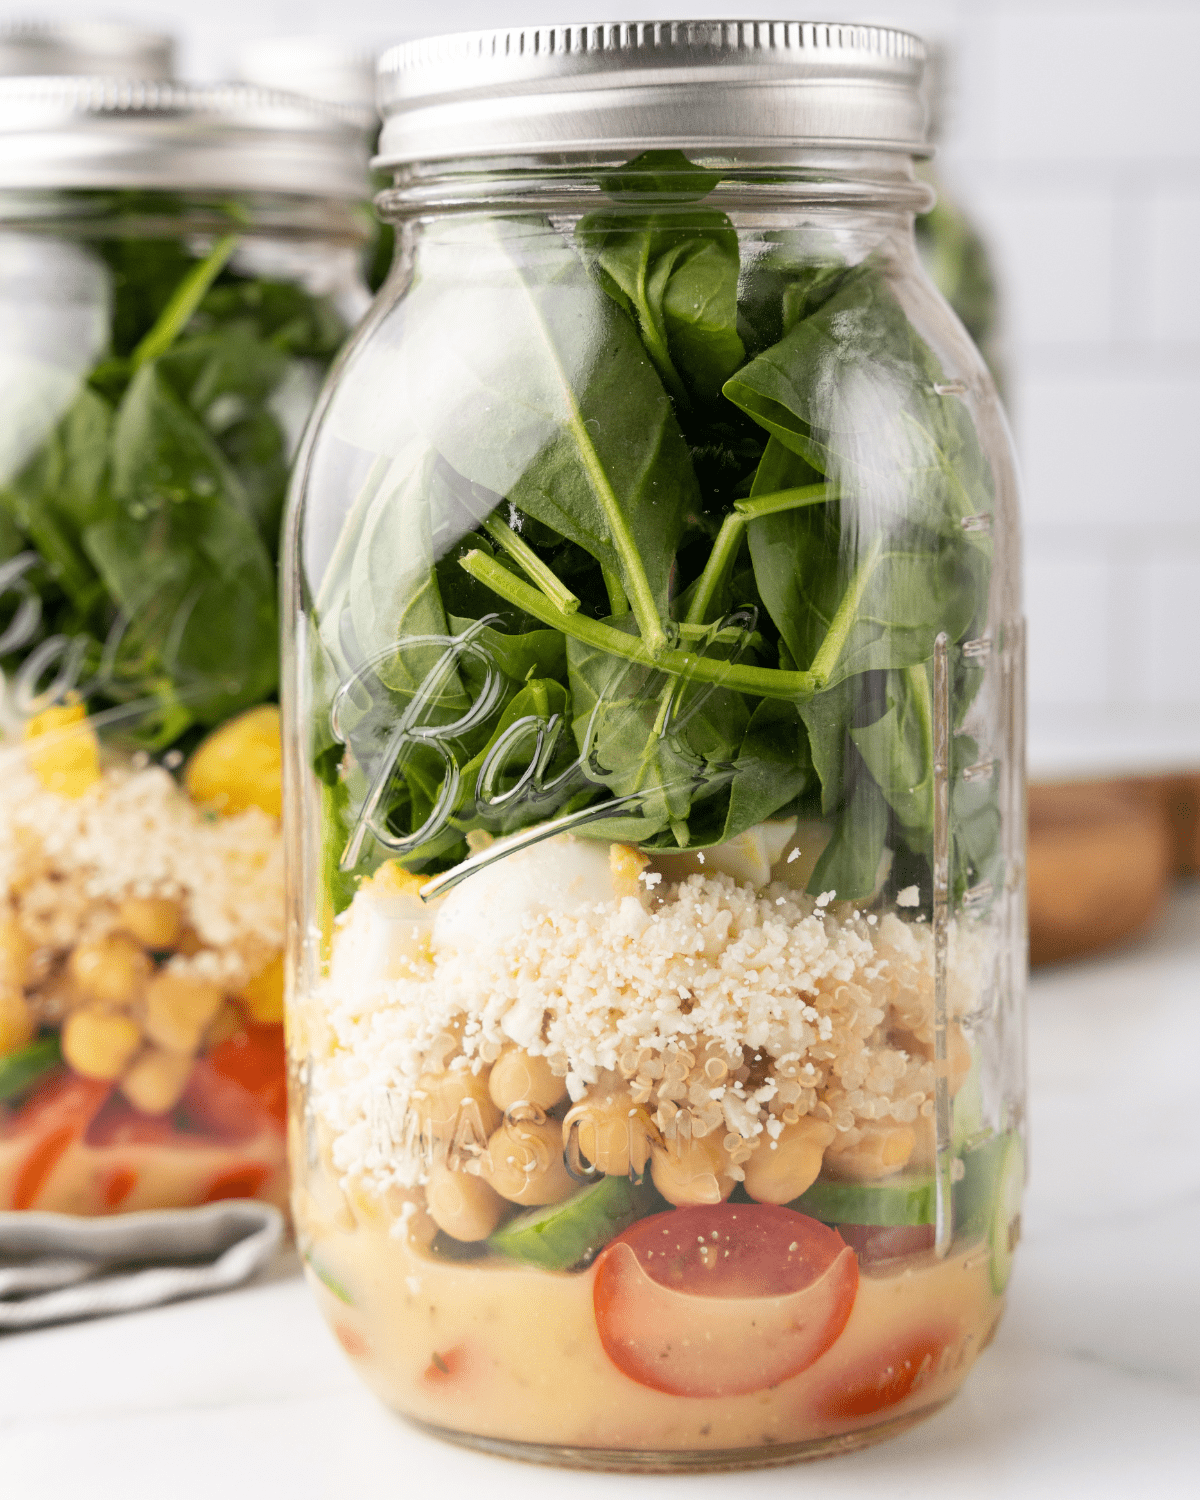 Easy Meal Prep Salad Jars (Tips + Variations)